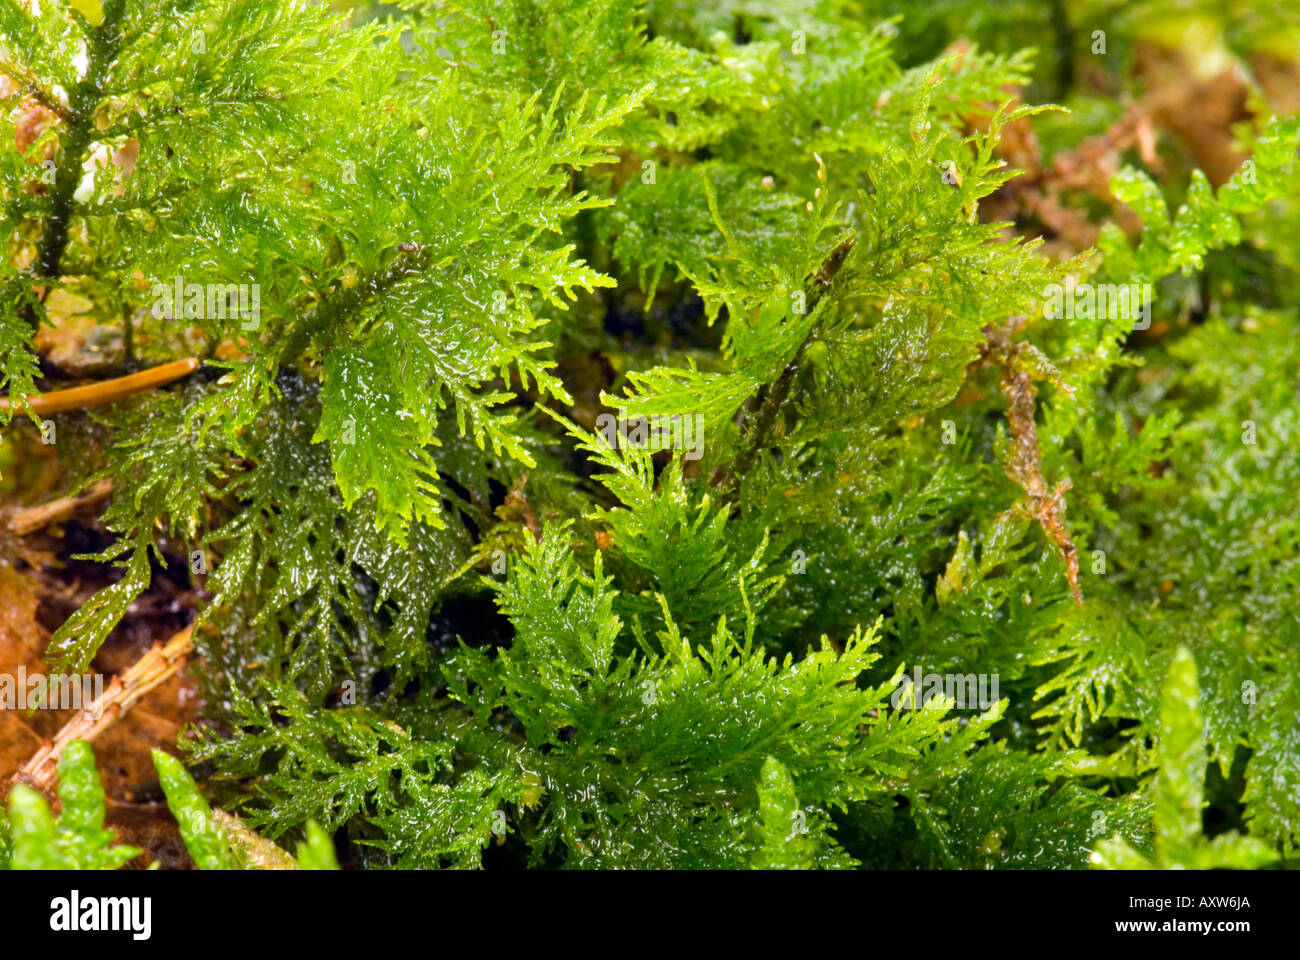 fresh dry wet damp green moss fern habitat forest makro close up plant natural ground Stock Photo